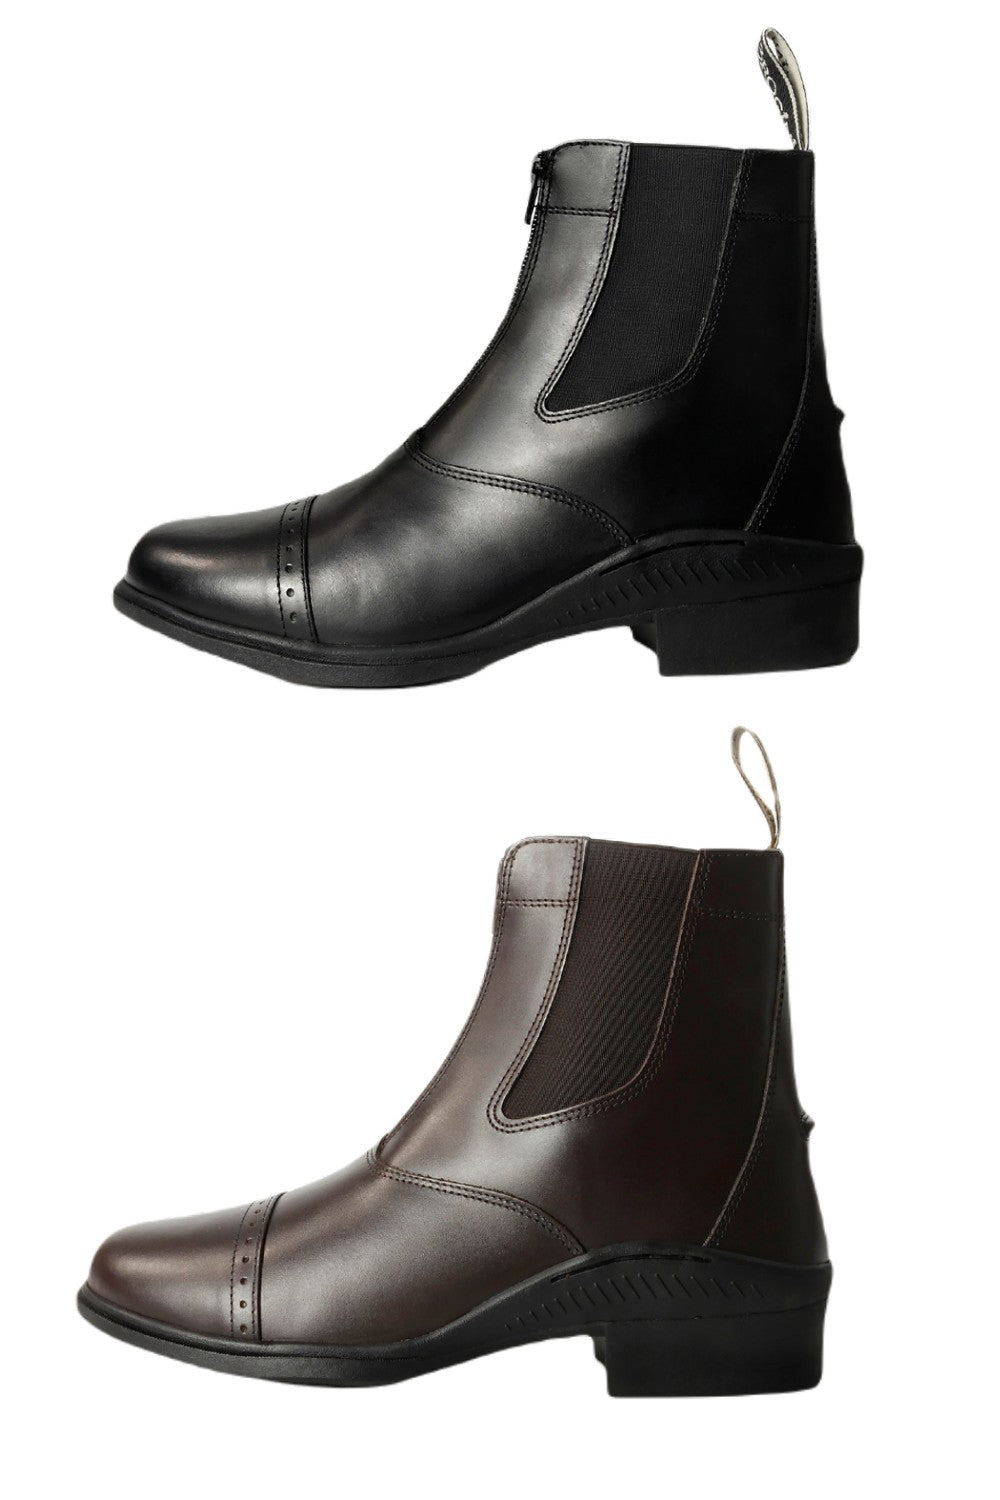 Brogini Tivoli Leather Paddock Boots In Black and Brown